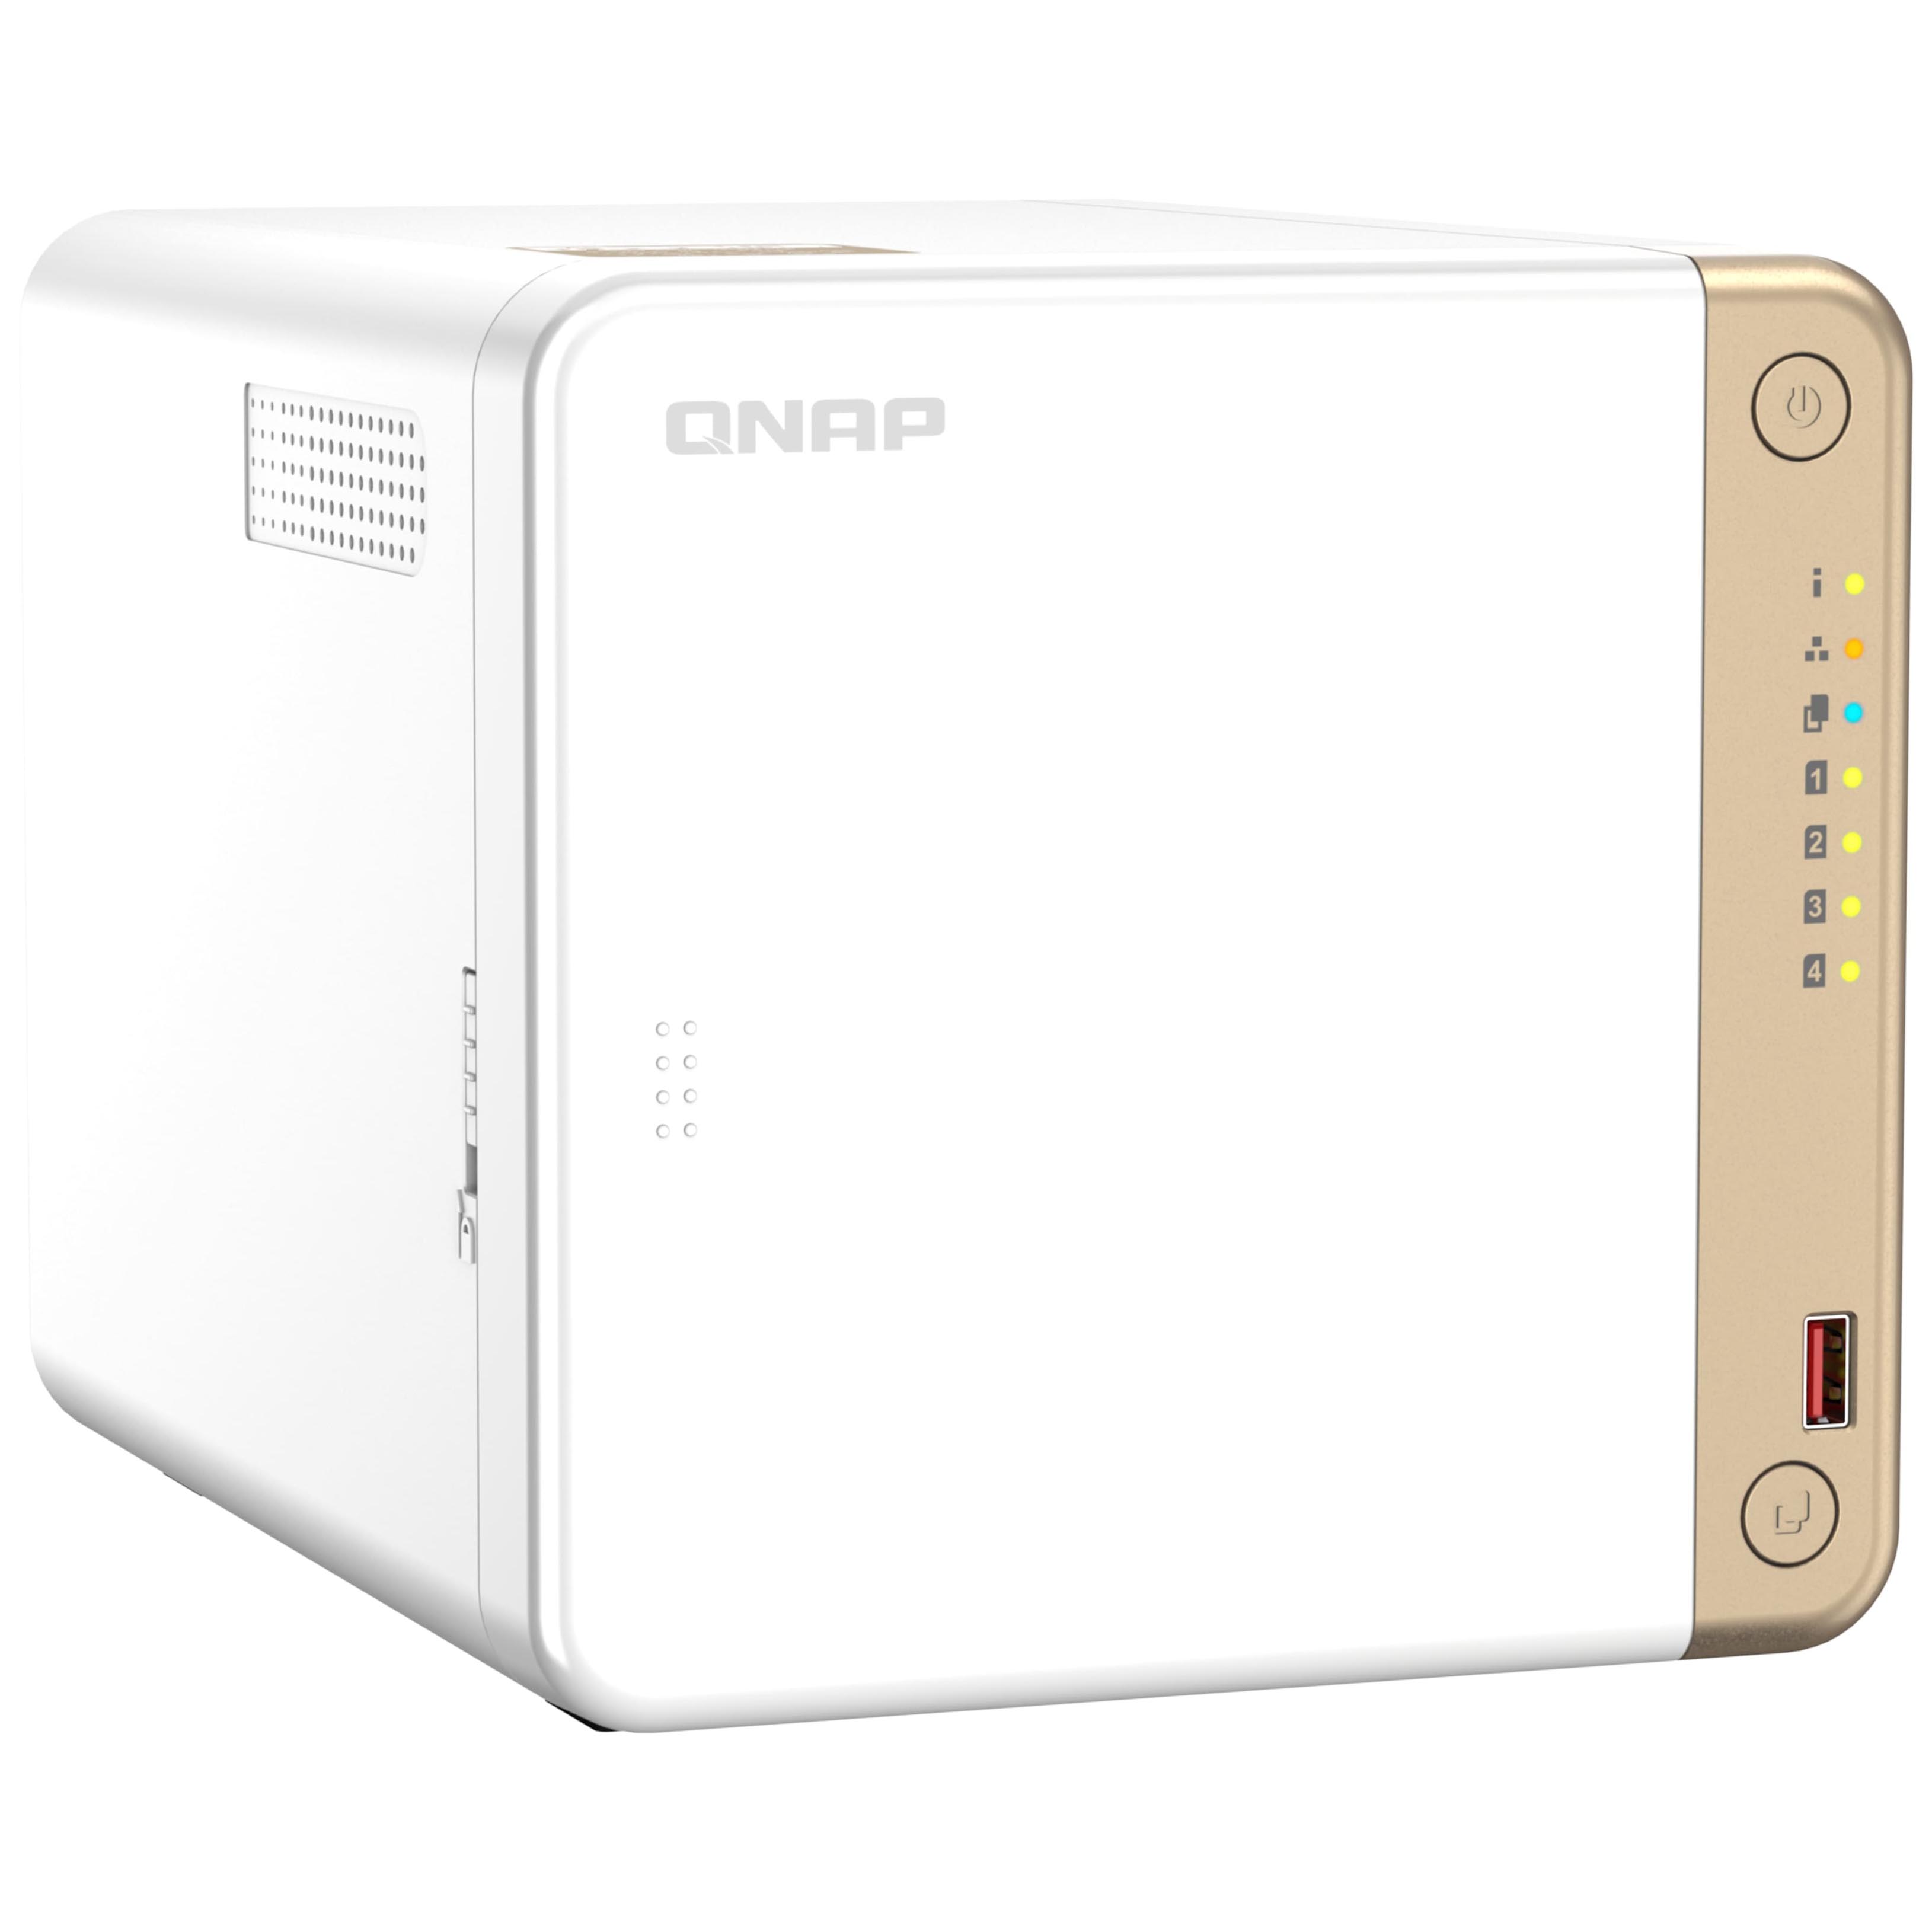 Сетевое хранилище QNAP TS-462 Nas, 4 отсека, без дисков, белый